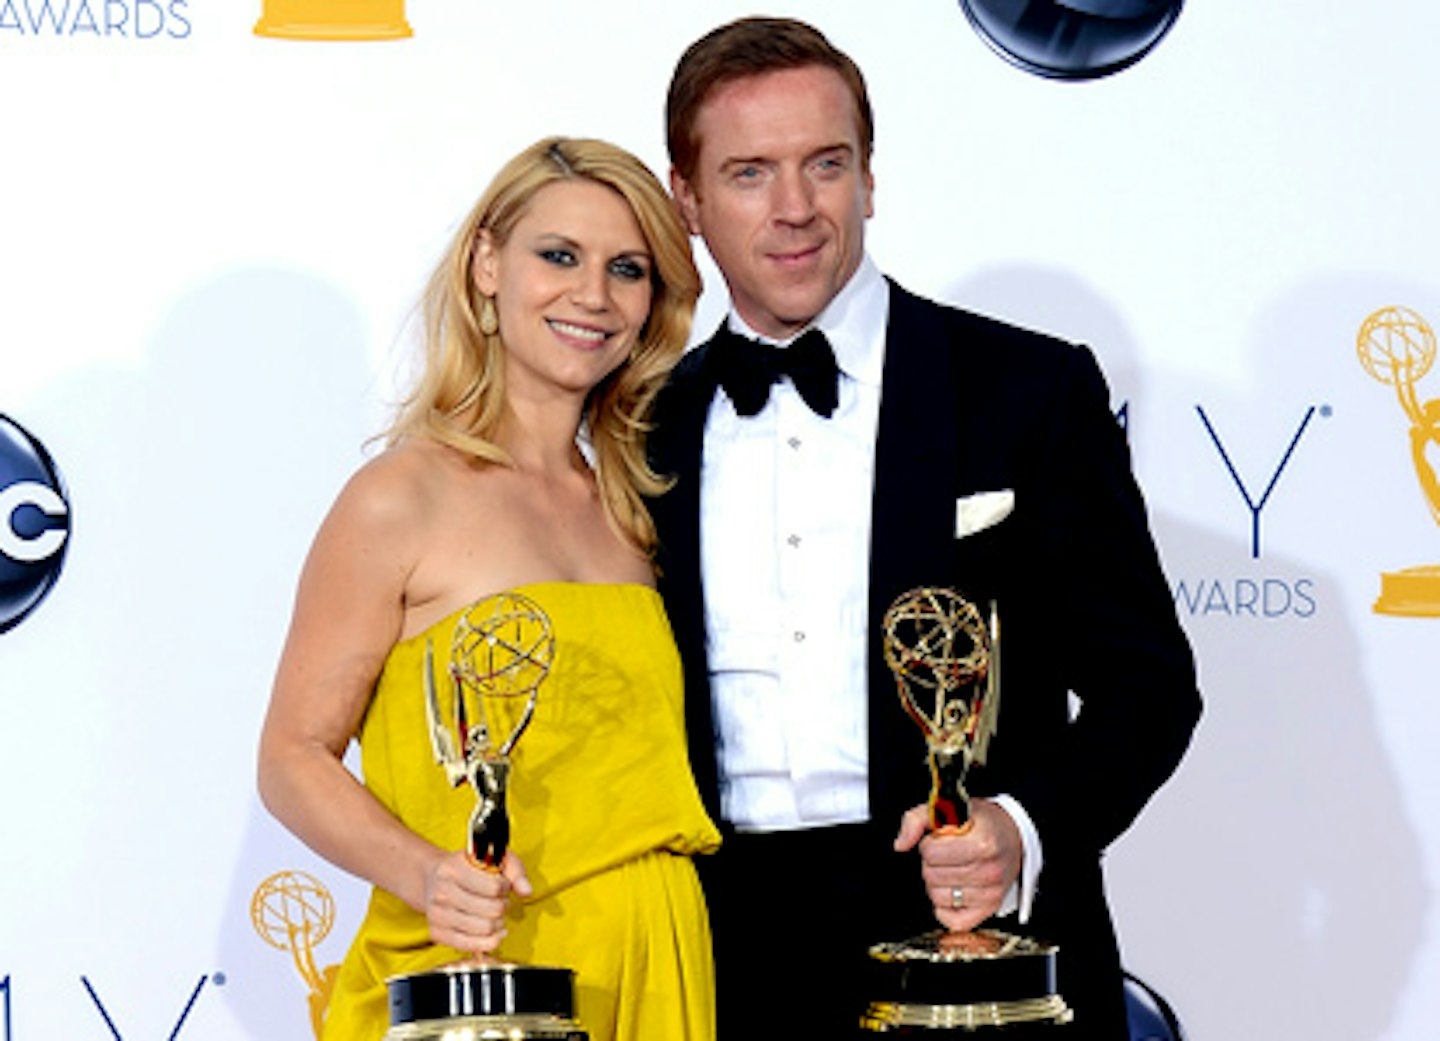 Homeland Invades The Emmy Awards